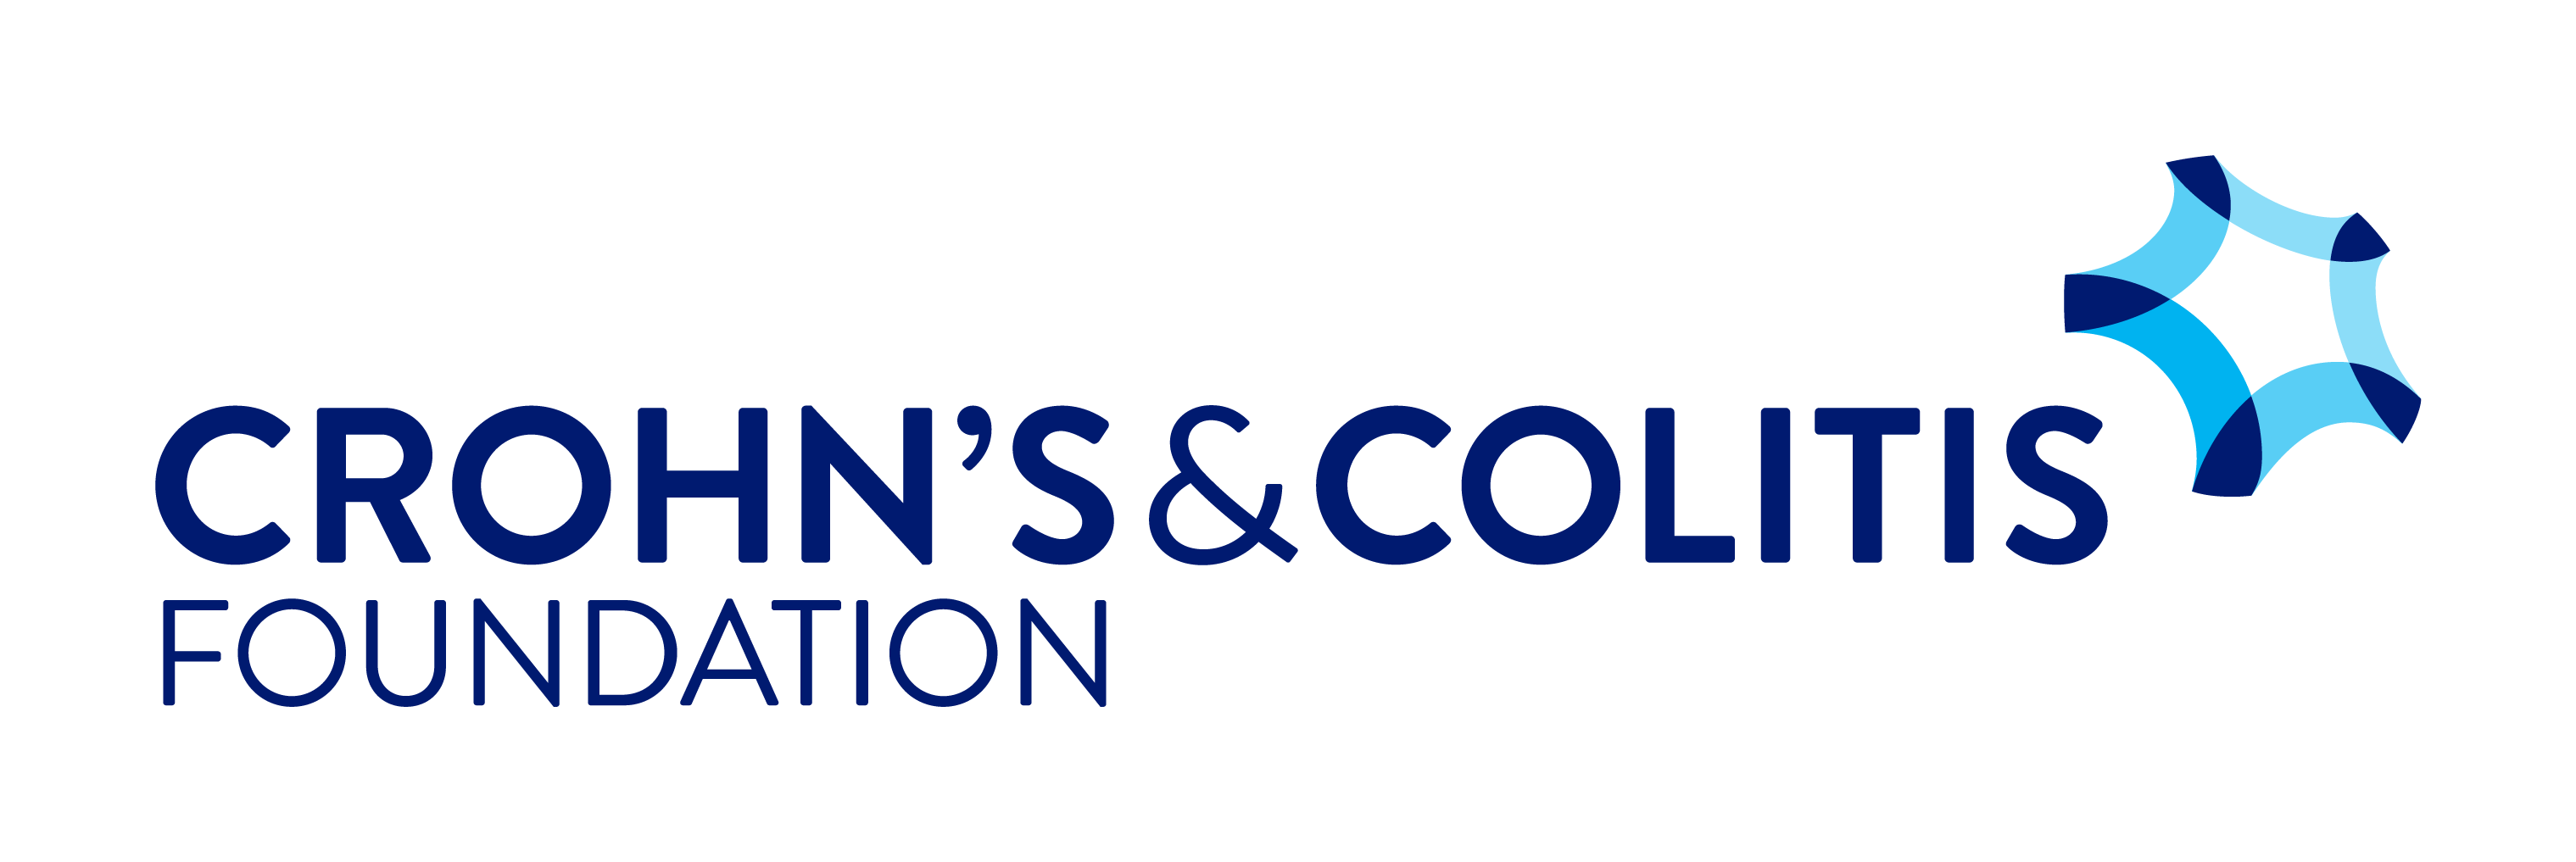 Crohn's and Colitis Foundation of America